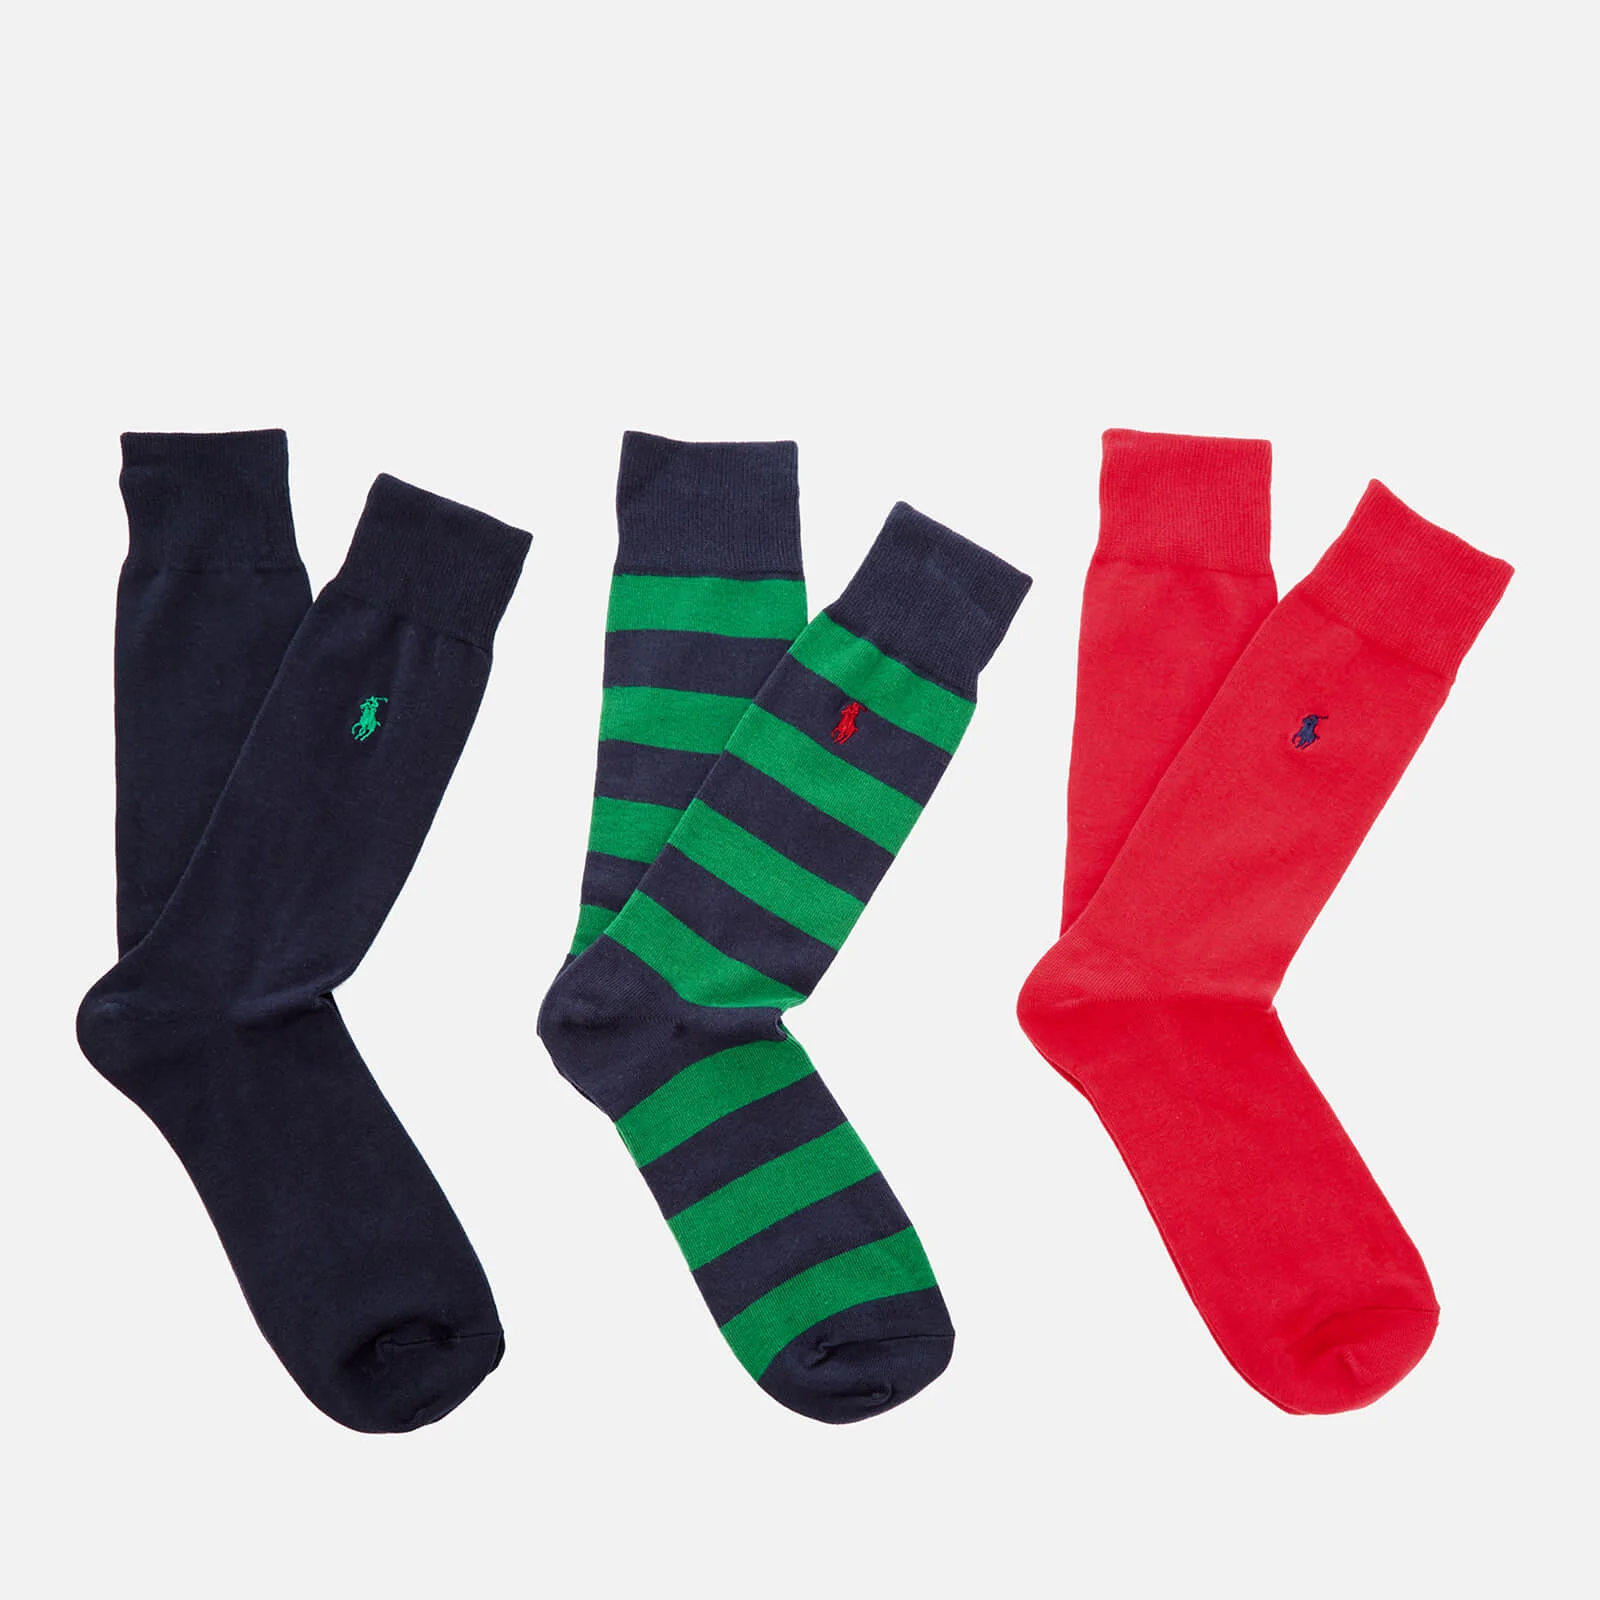 Polo Ralph Lauren Men's 3 Pack Socks - Assorted Image 1